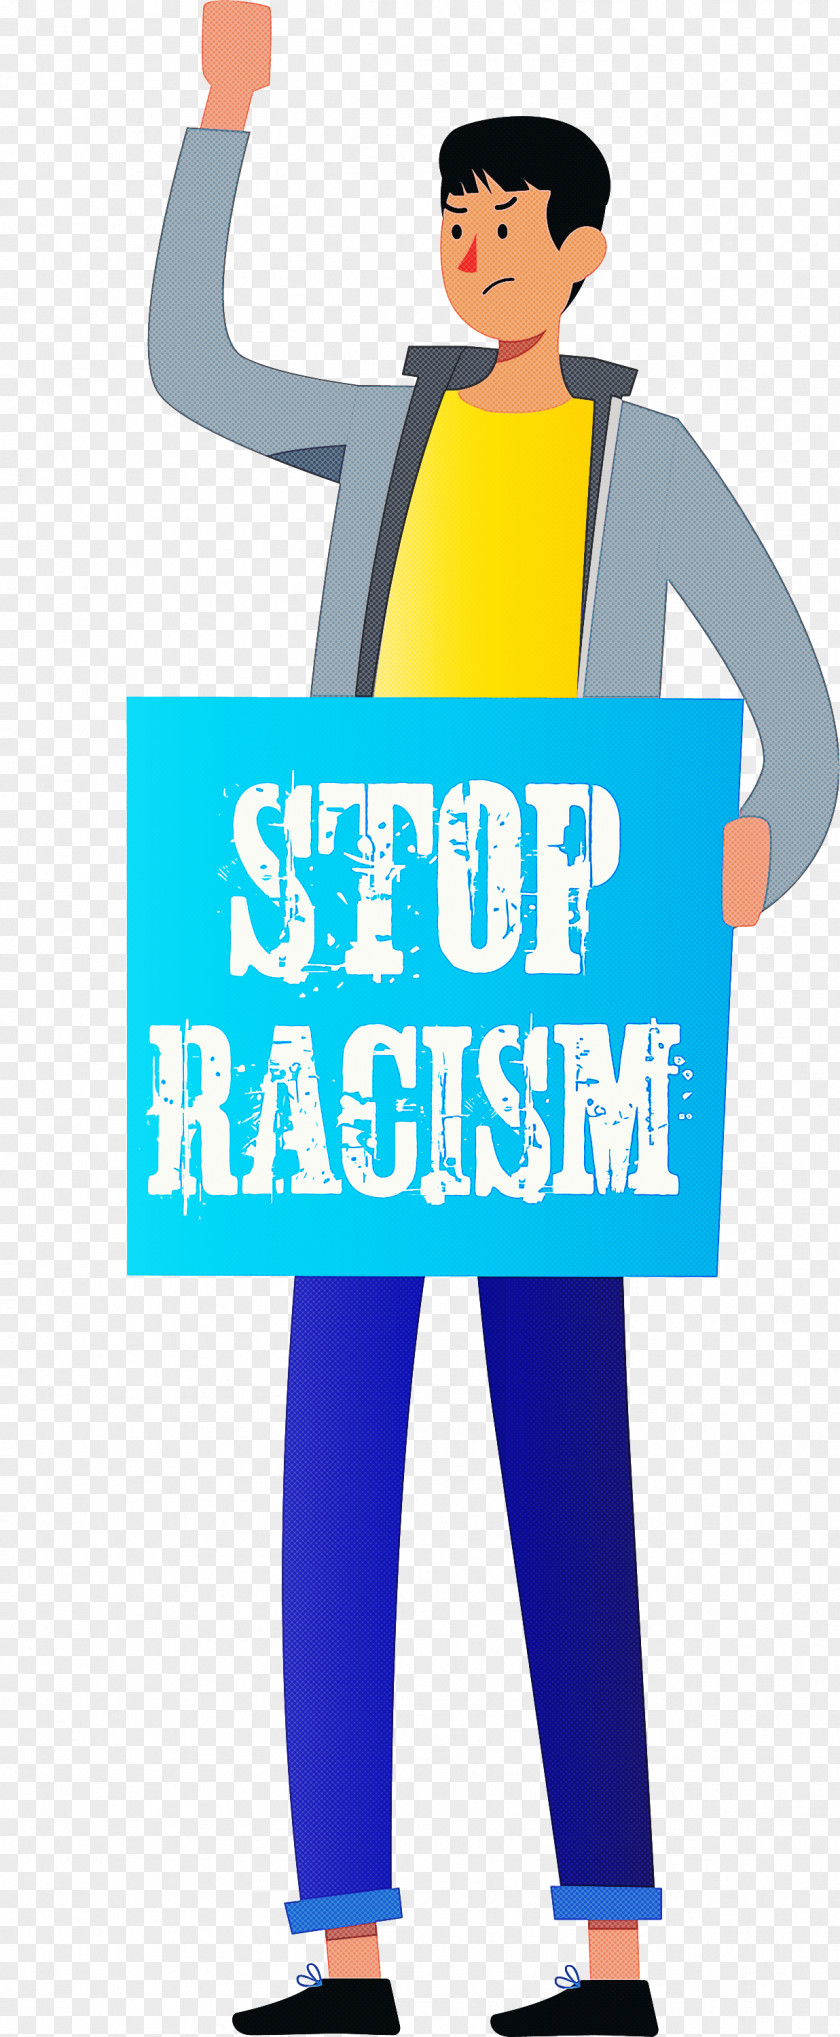 STOP RACISM PNG